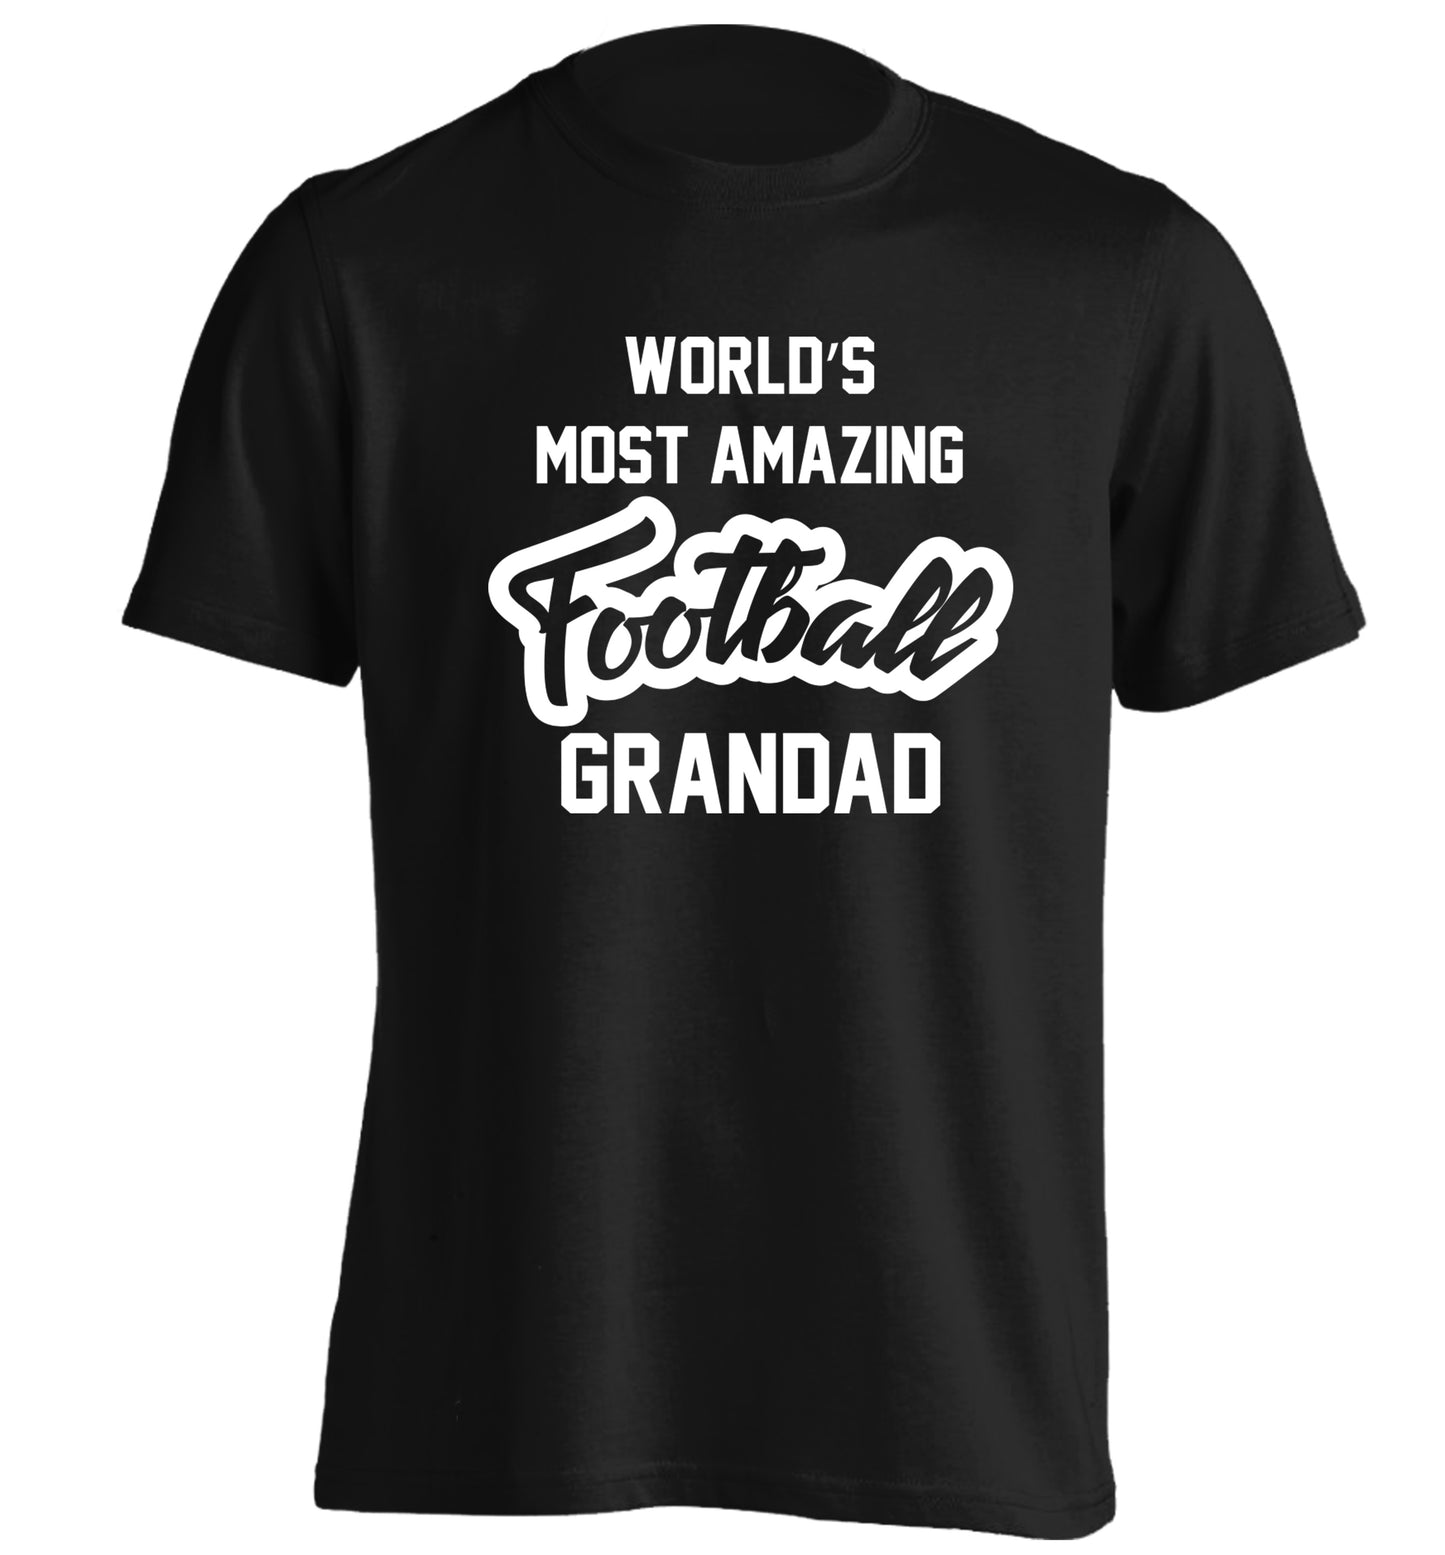 Worlds most amazing football grandad adults unisexblack Tshirt 2XL